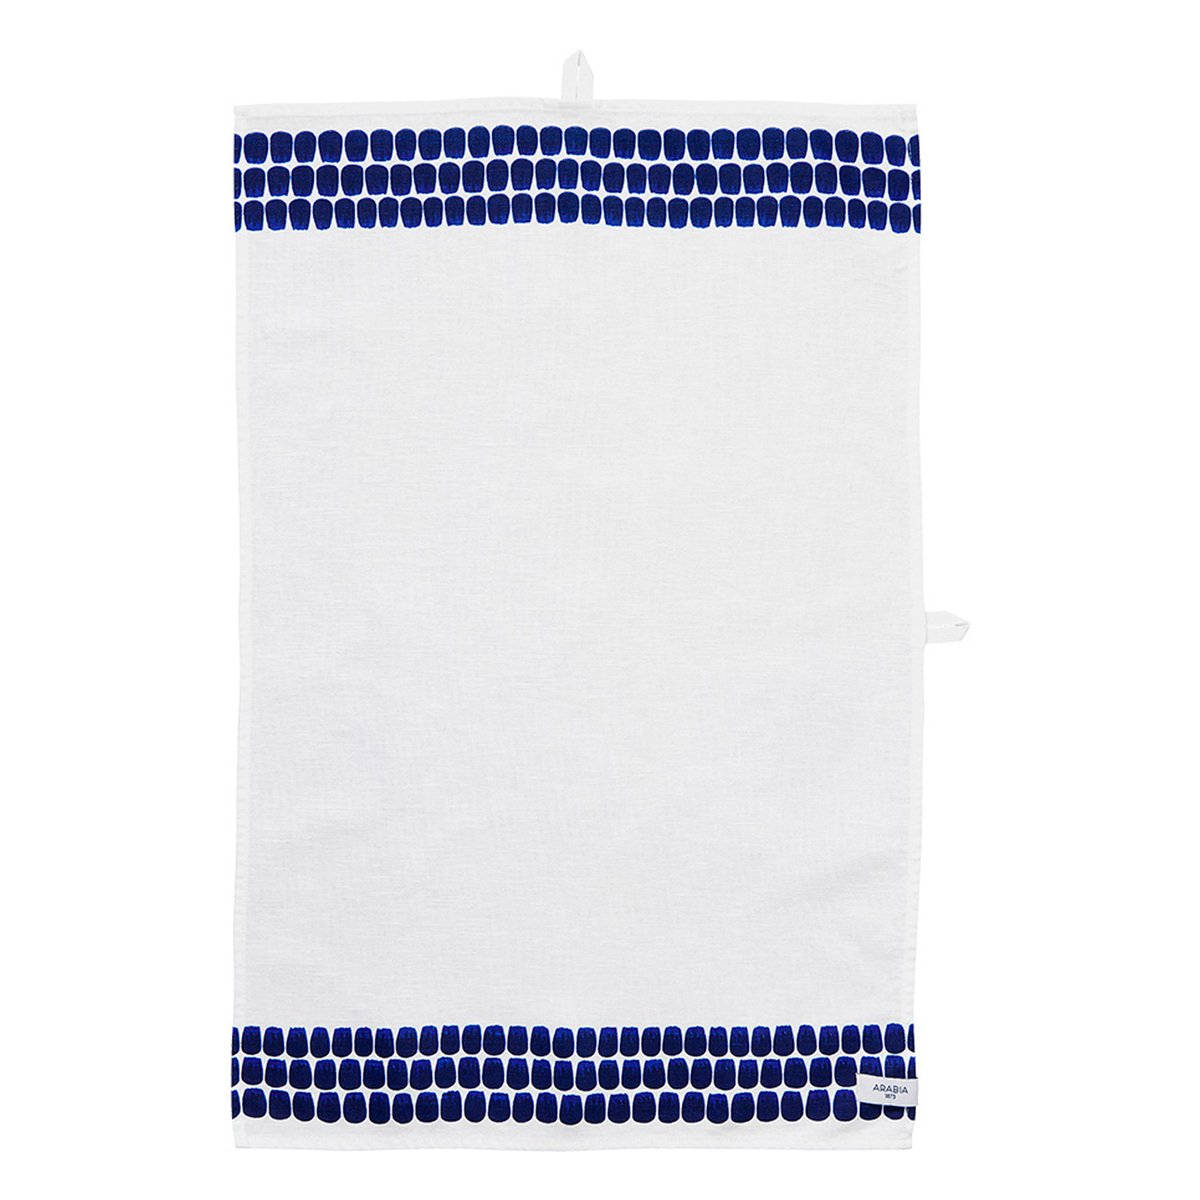 New Towels Teapot design blue red kitchen towel 2Pcs Luxury Kitchen Towel  Set napkin Cotton Highly